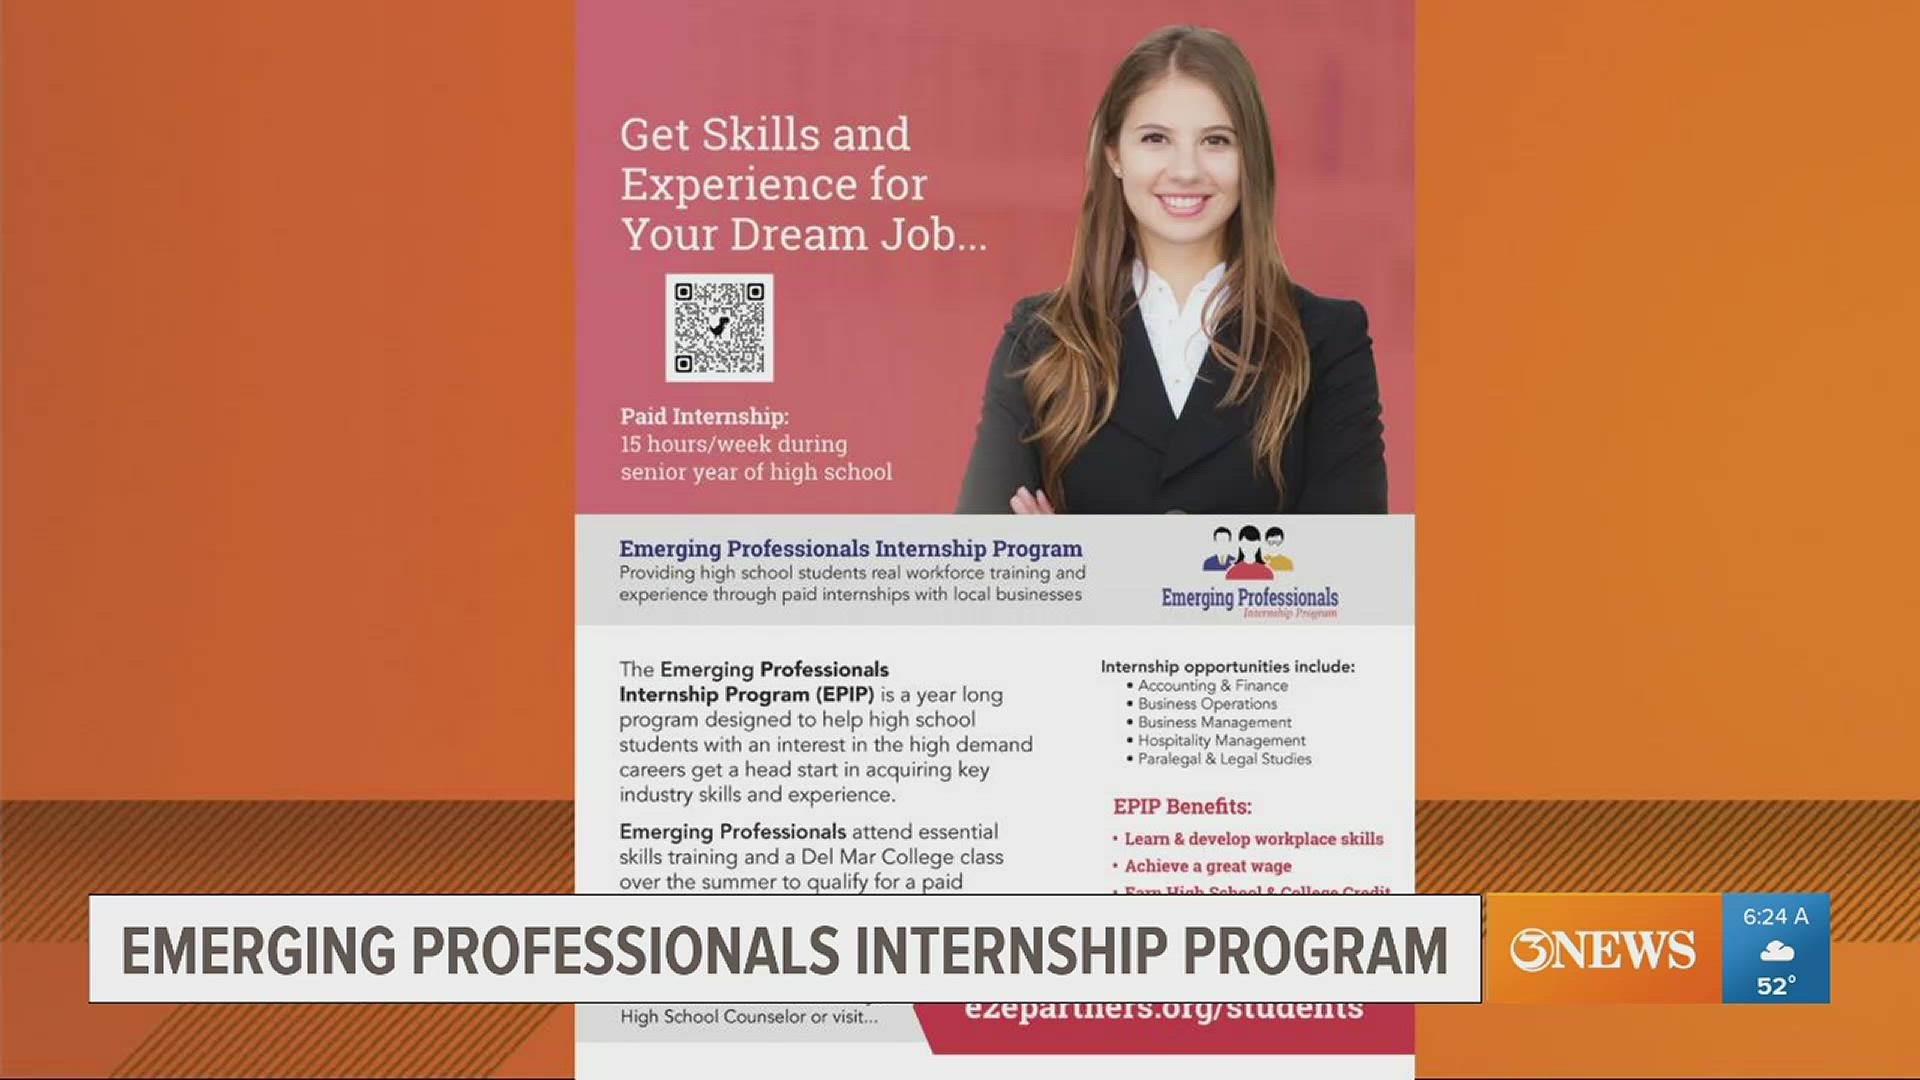 The year-long program has multiple internship opportunities.